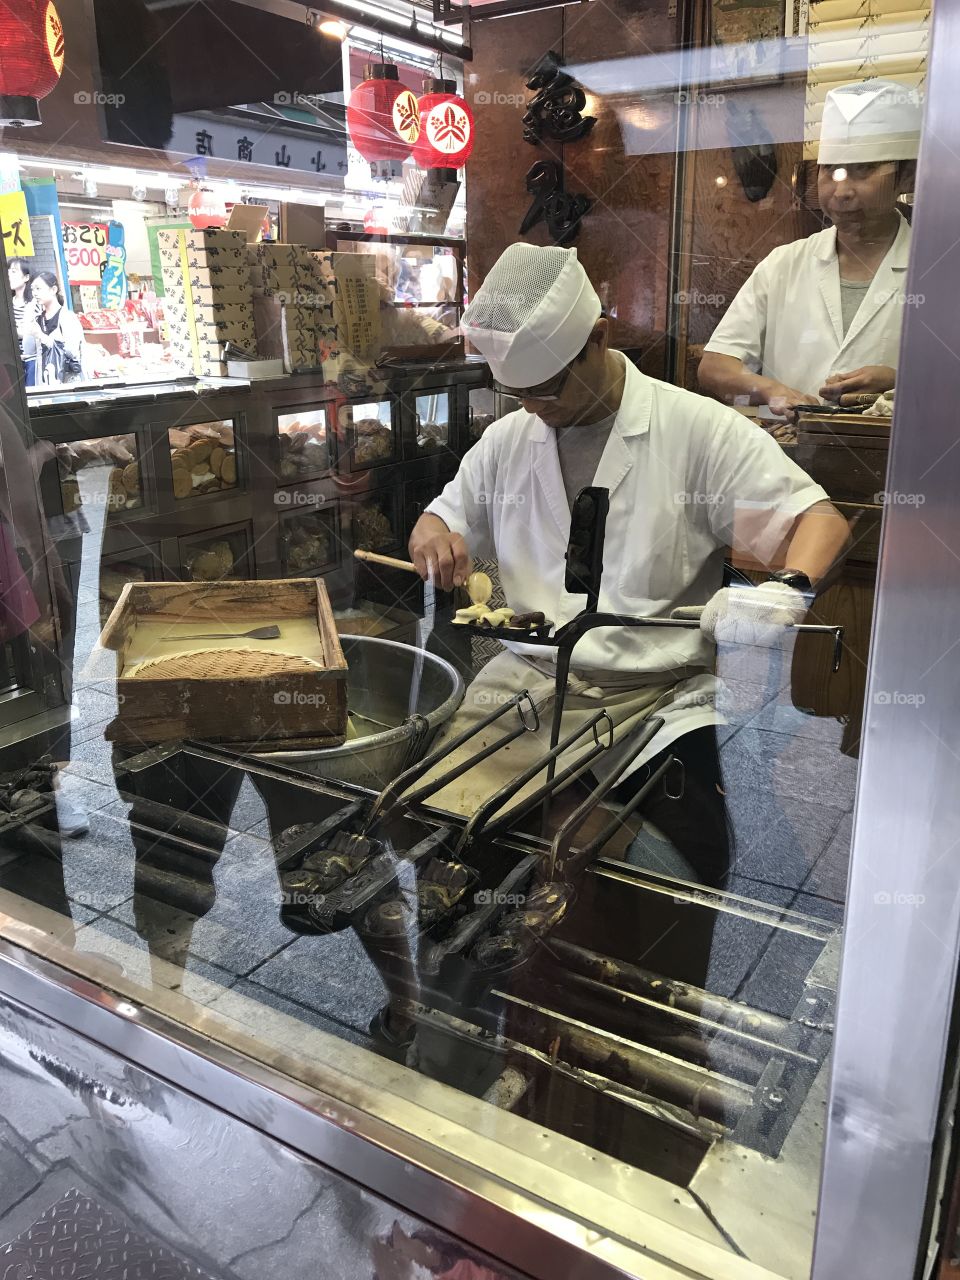 Japanese Street food being made ...